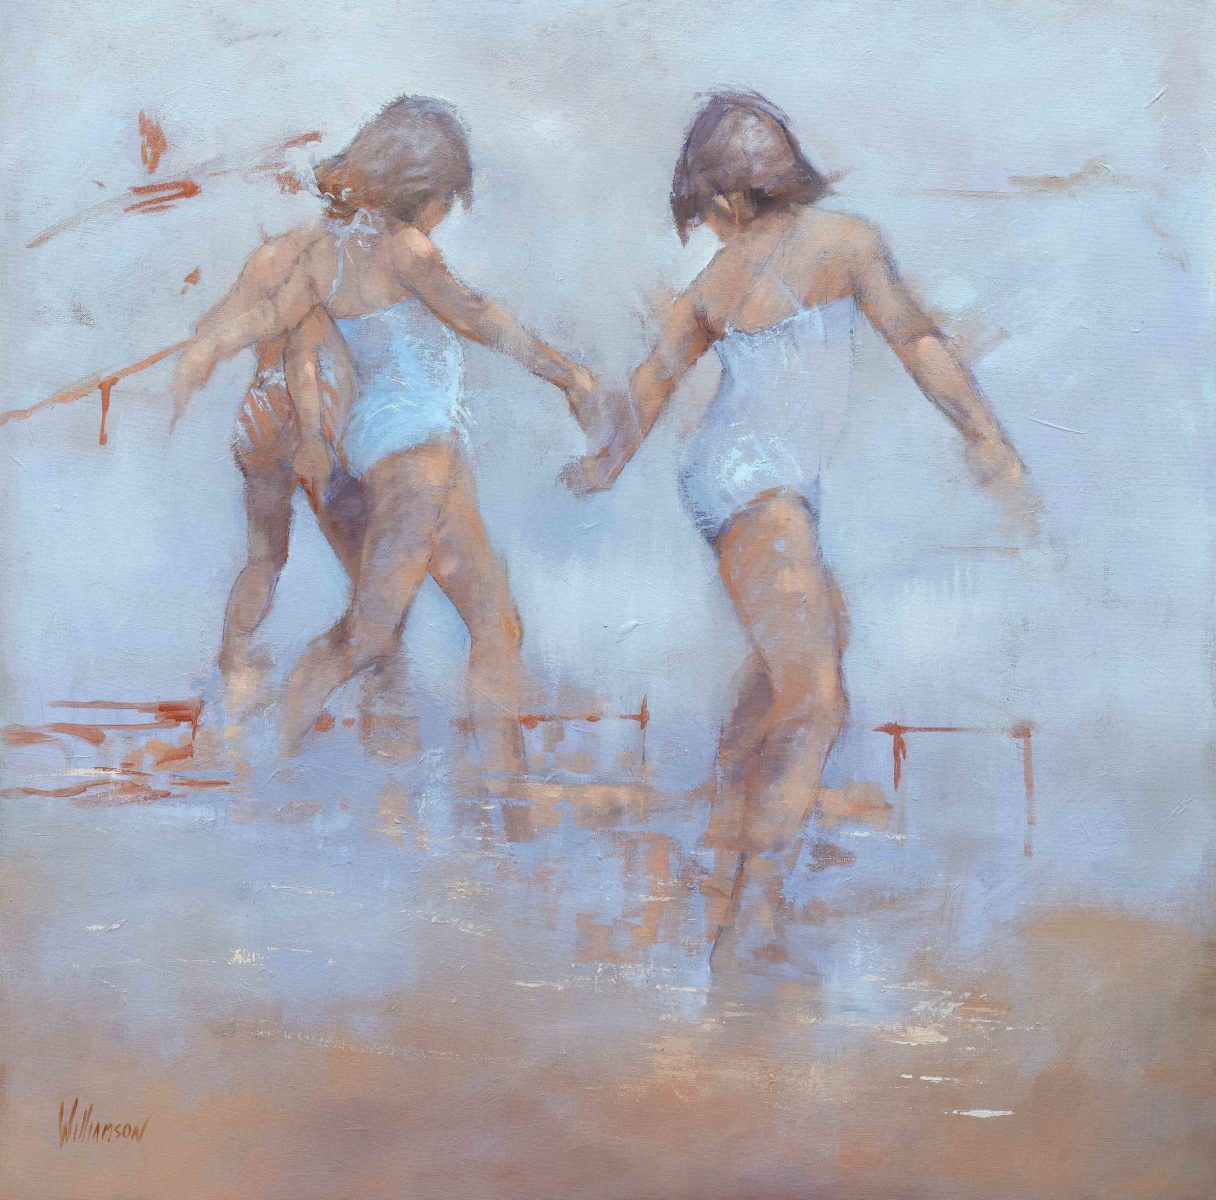 Reflections | Jan Williamson | Oil on canvas | 102 x 102 cm | $9,800